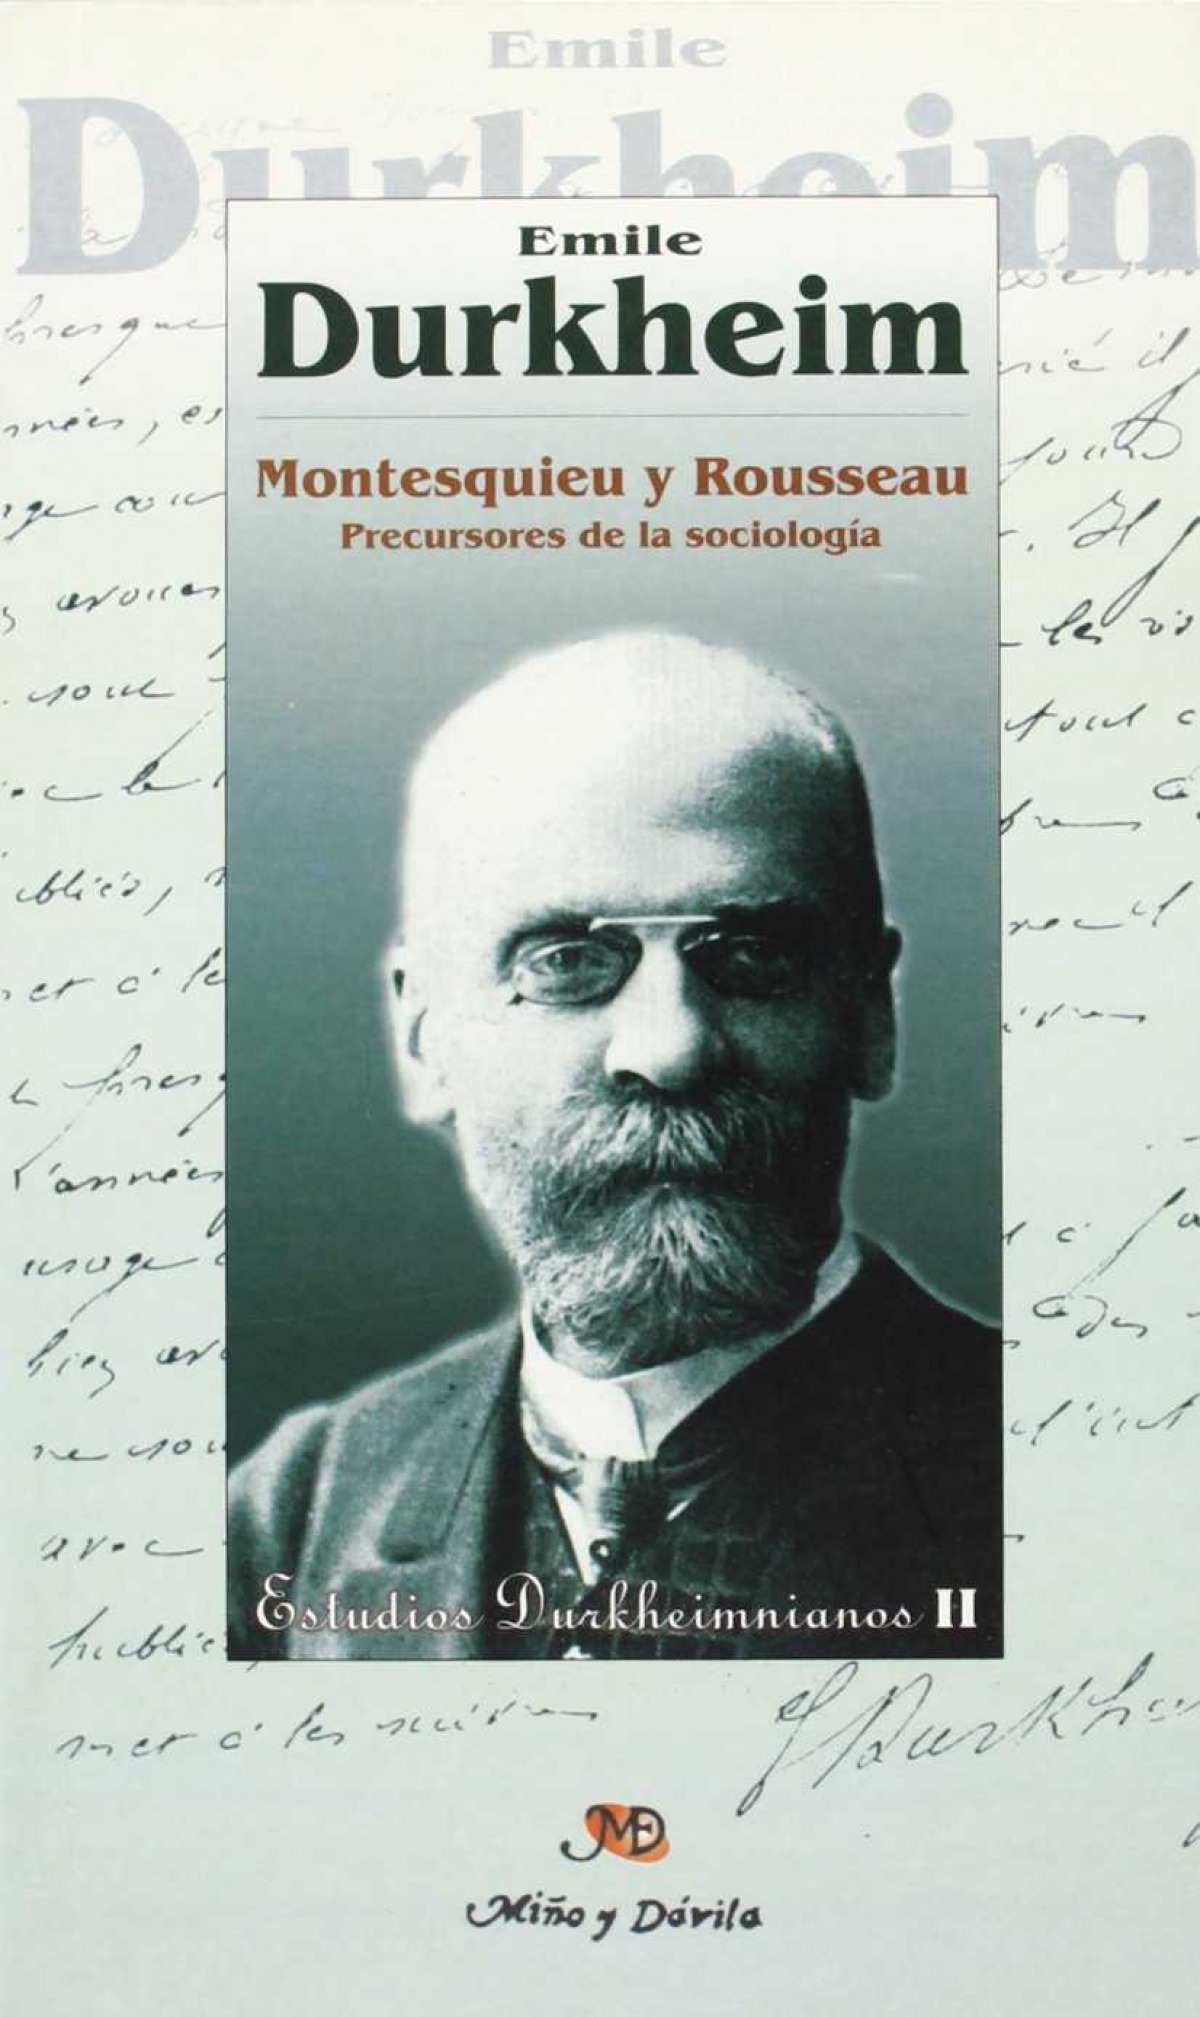 Montesquieu y rousseau. precursores de la sociologia - Durkheim, Emile